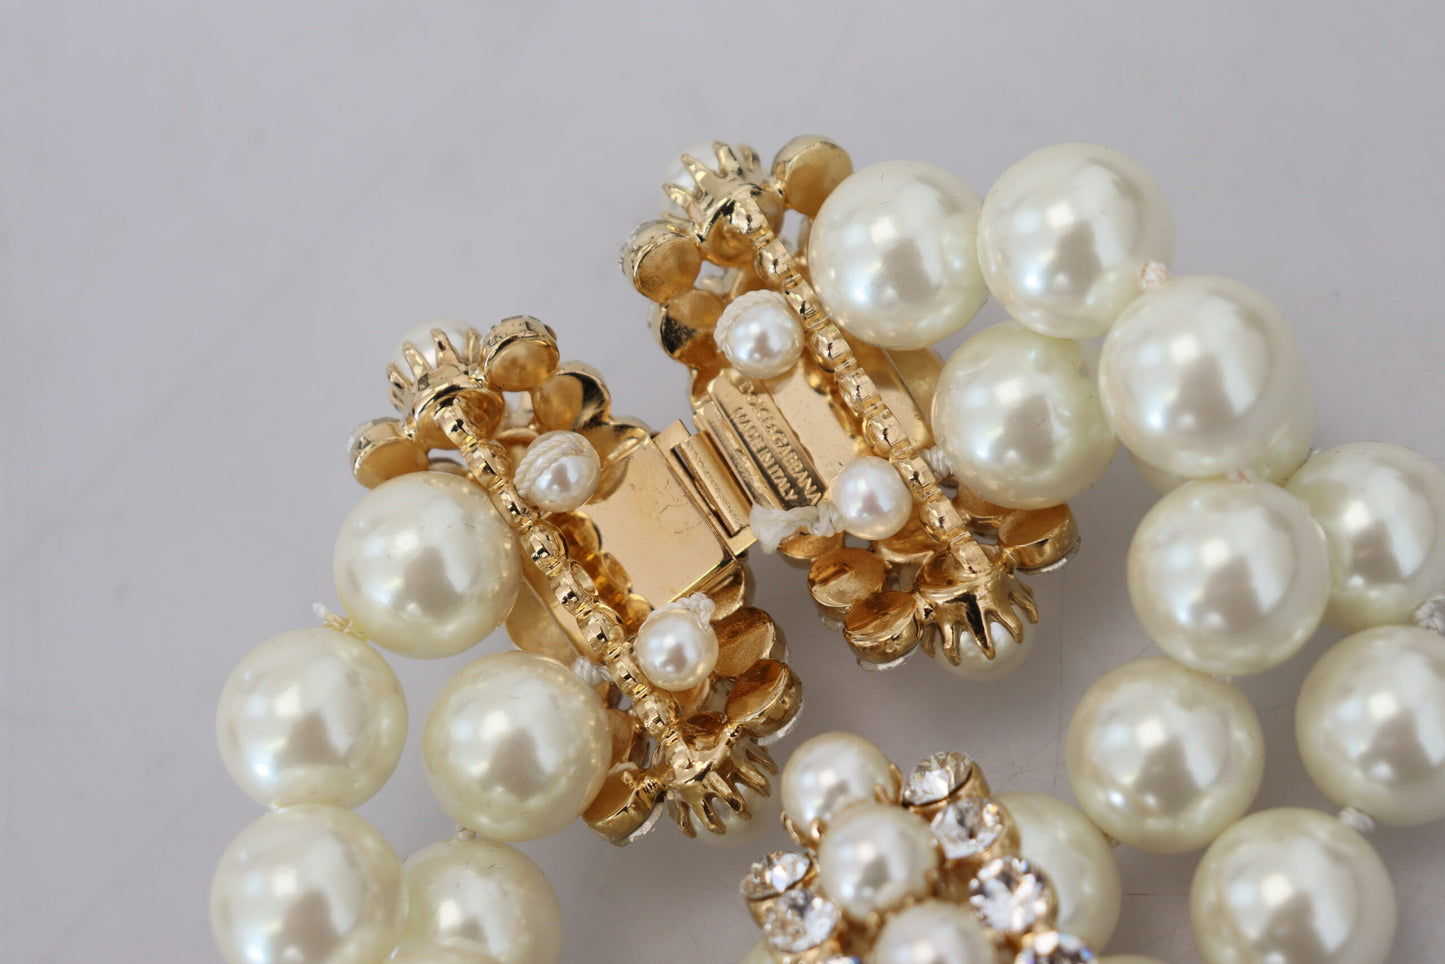 Sicily Motive Gold-Tone Charm Bracelet